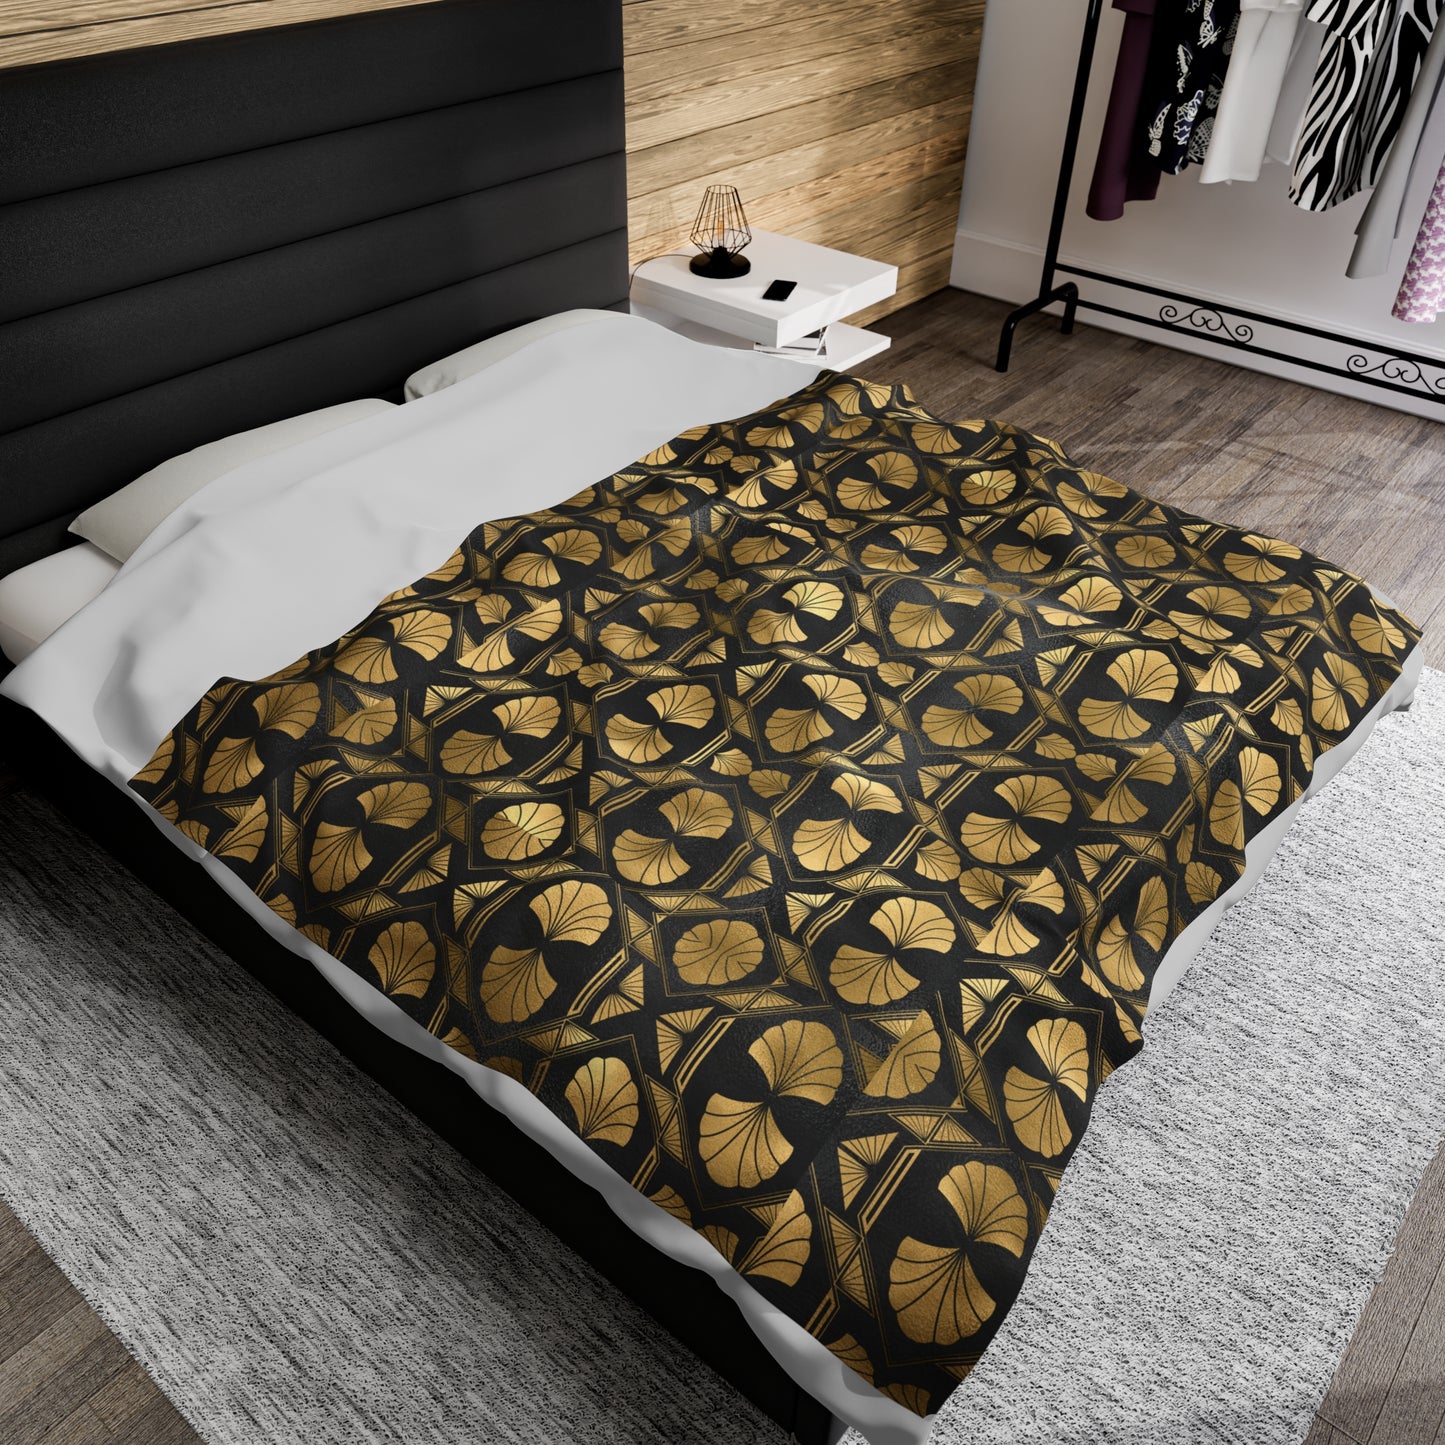 Gold and Black Velveteen Plush Blanket, Throw Blanket Bed Couch, Soft Blanket